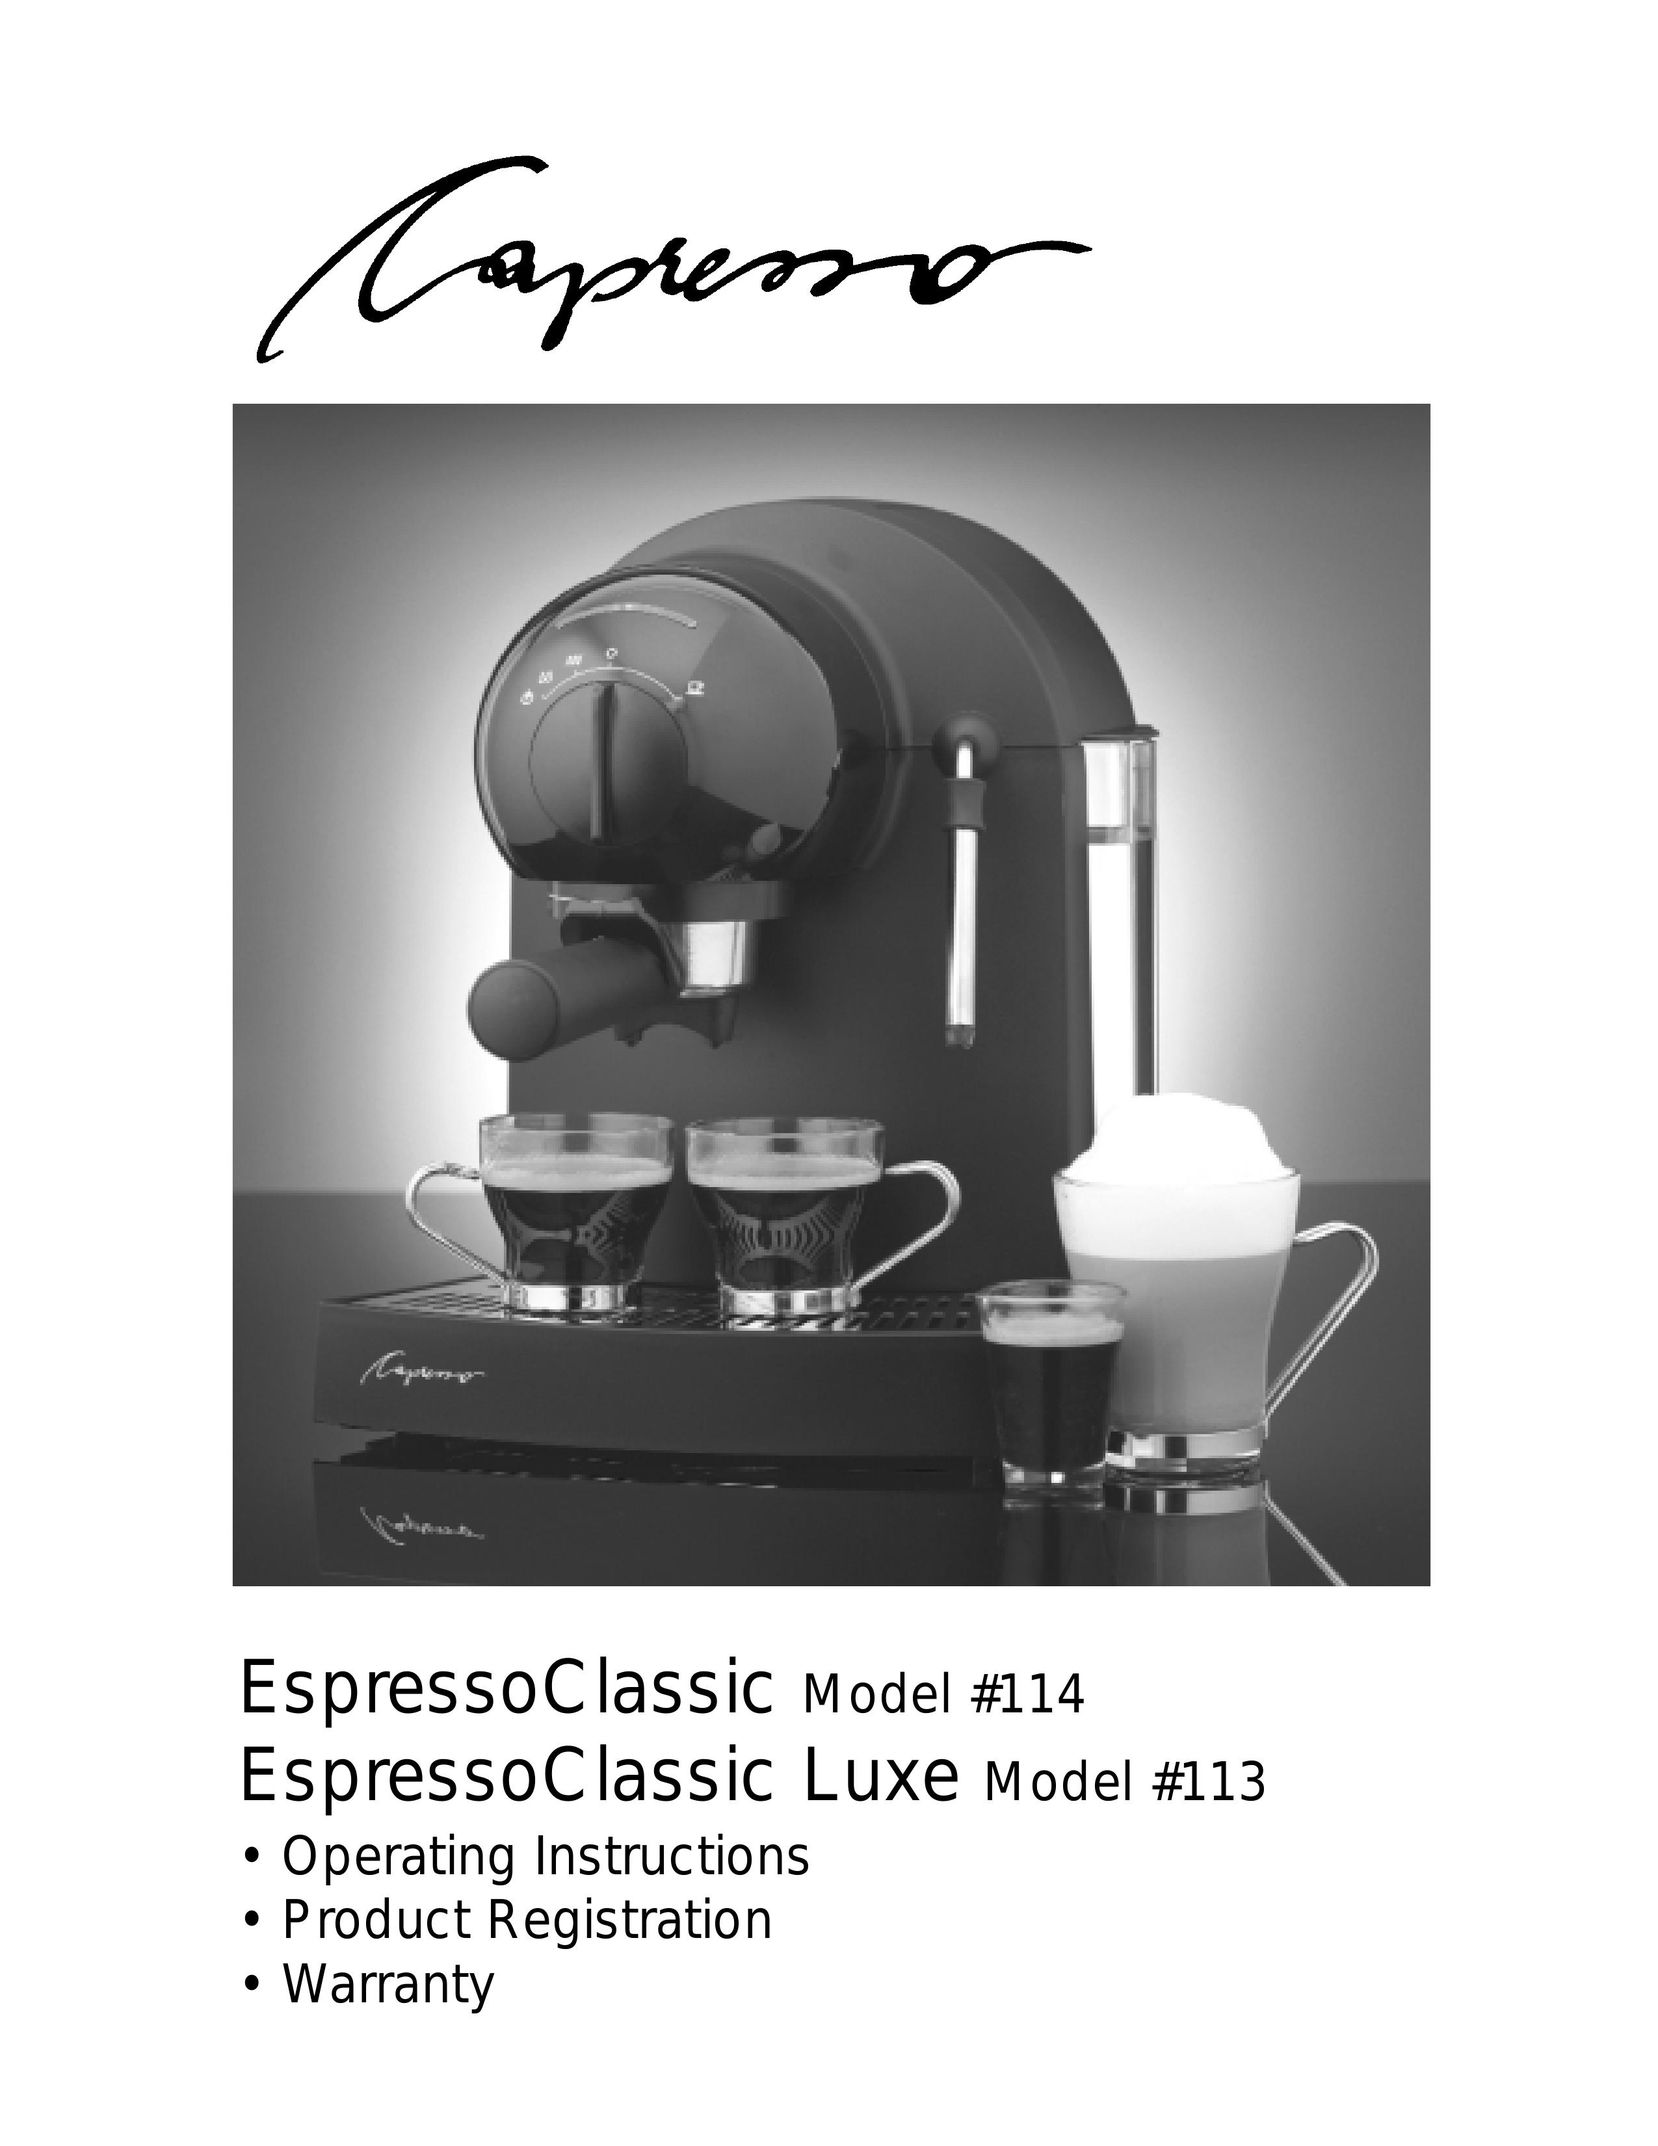 Capresso Espresso Classic 114 Espresso Maker User Manual